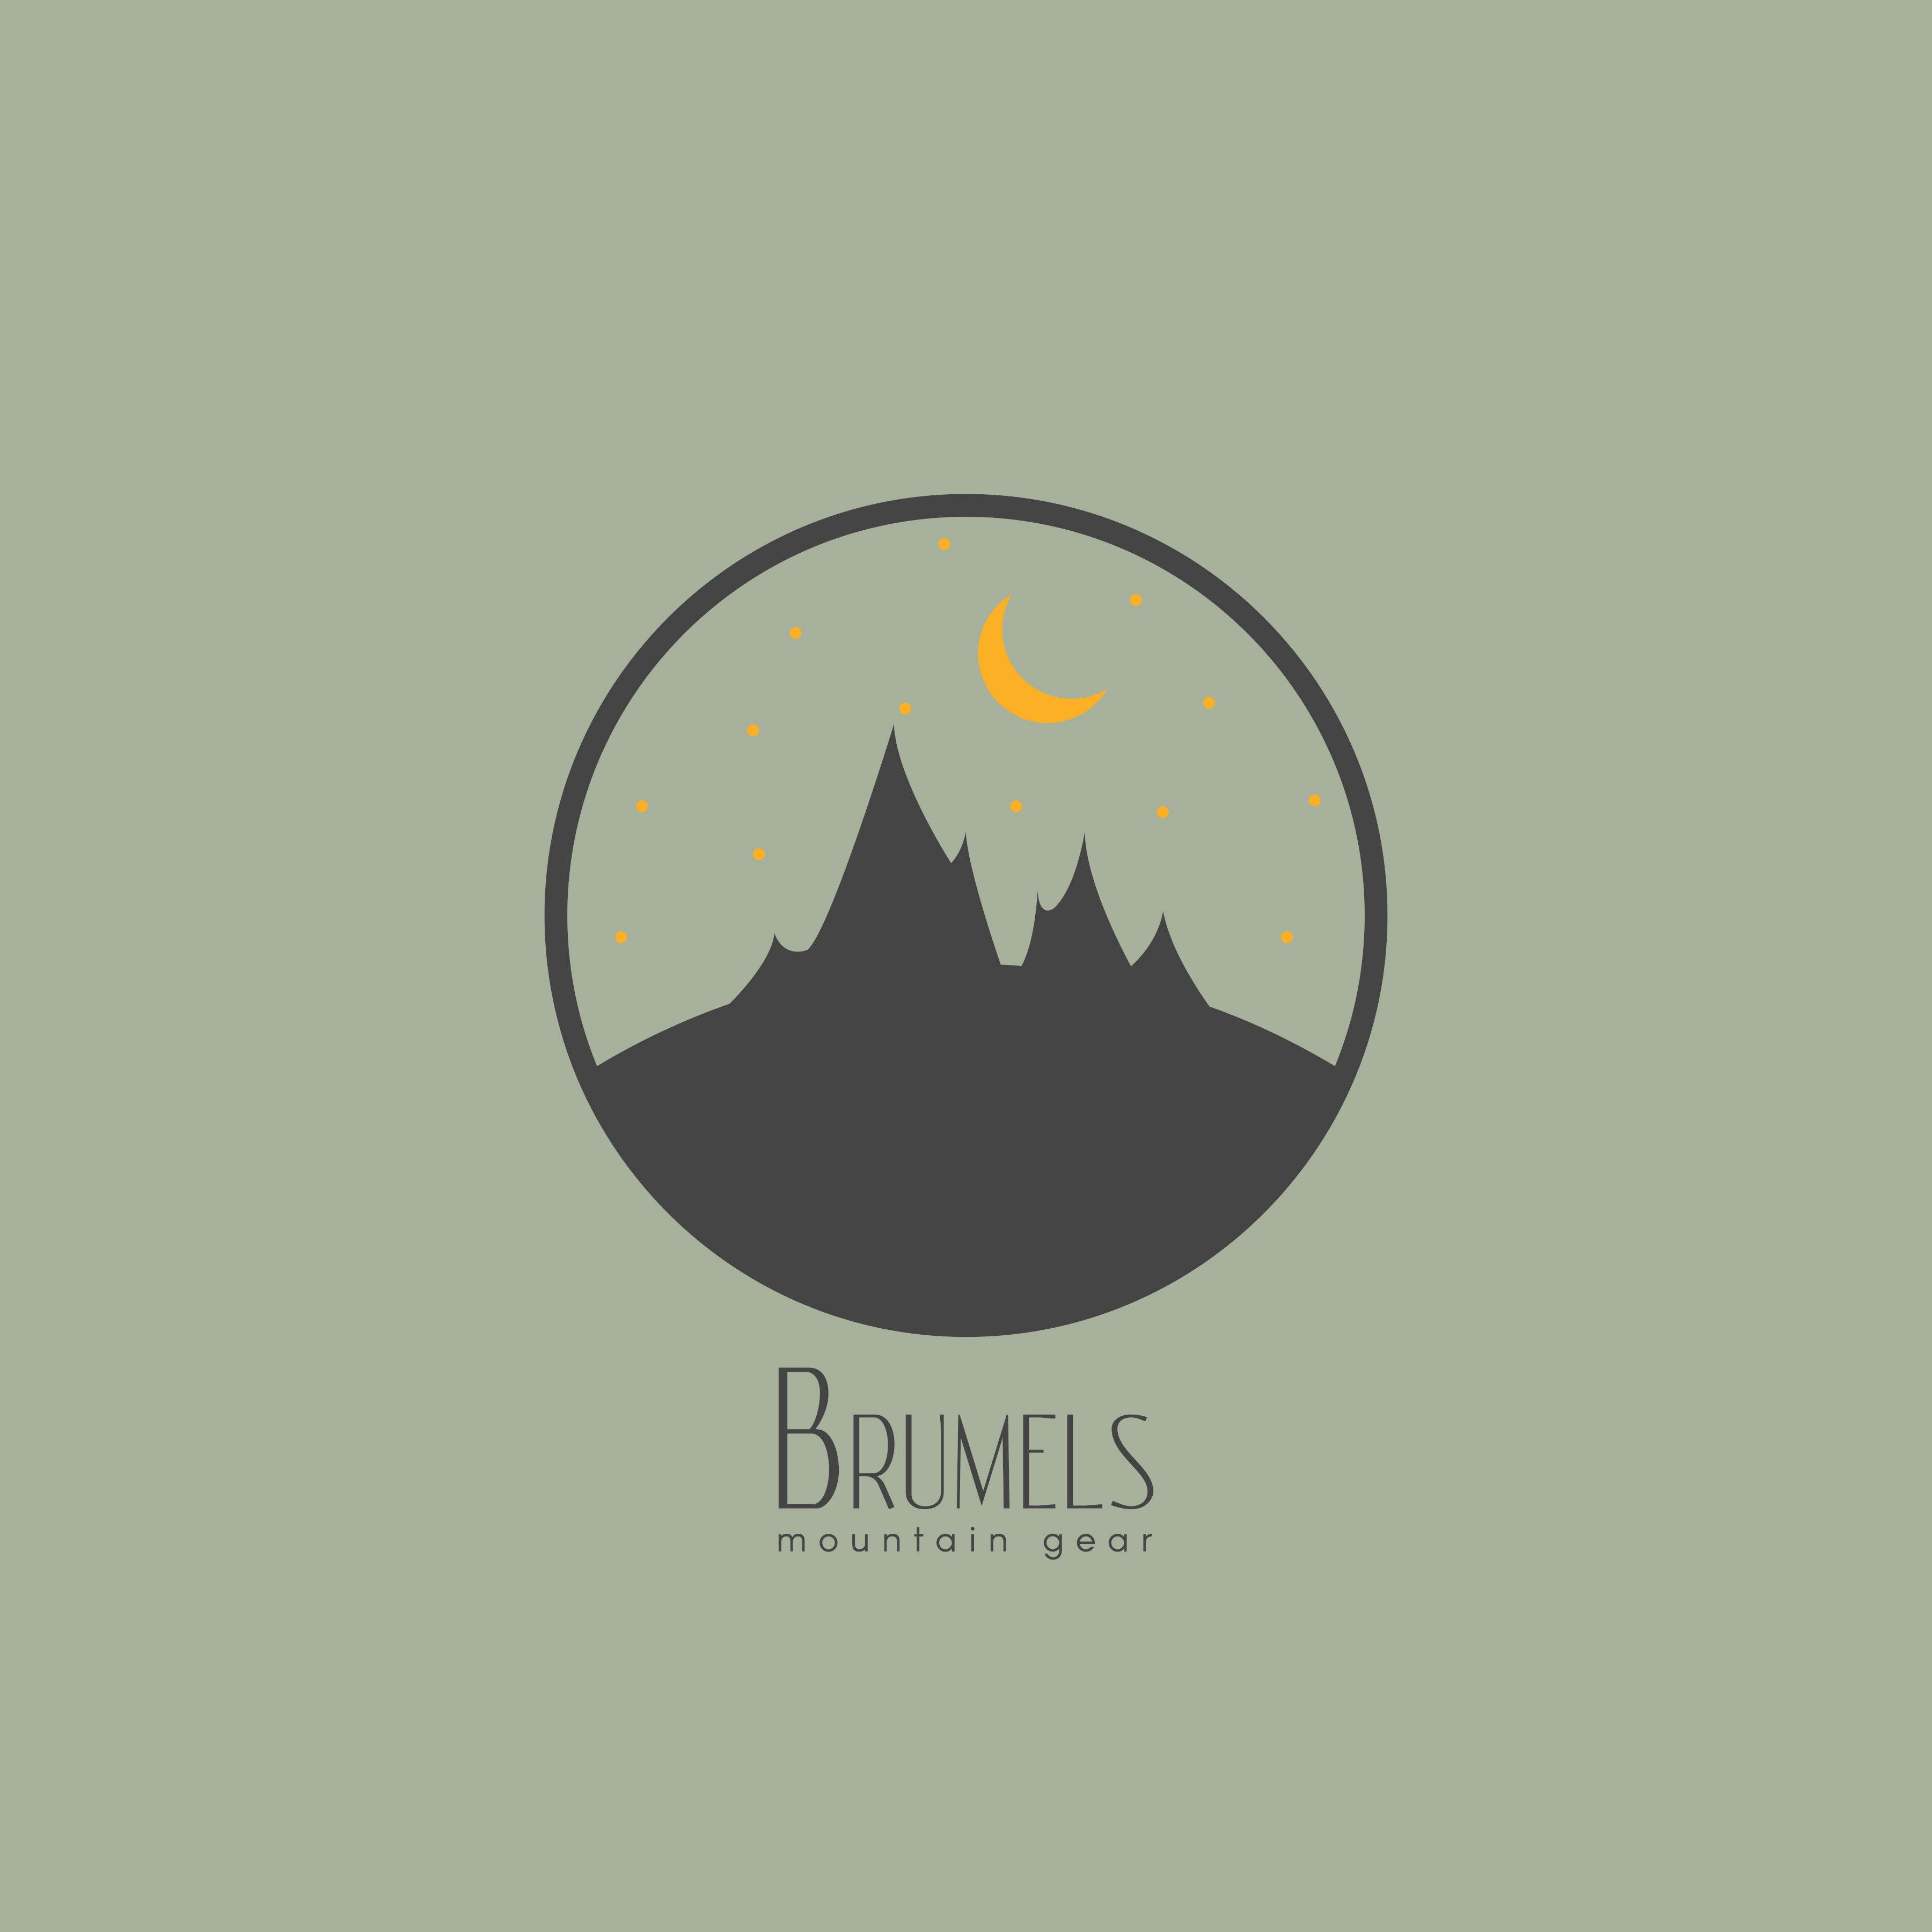 Green and Yellow in a Circle Logo - Brumels mountain gear, mountain, circle, logo, hiking, moon, stars ...